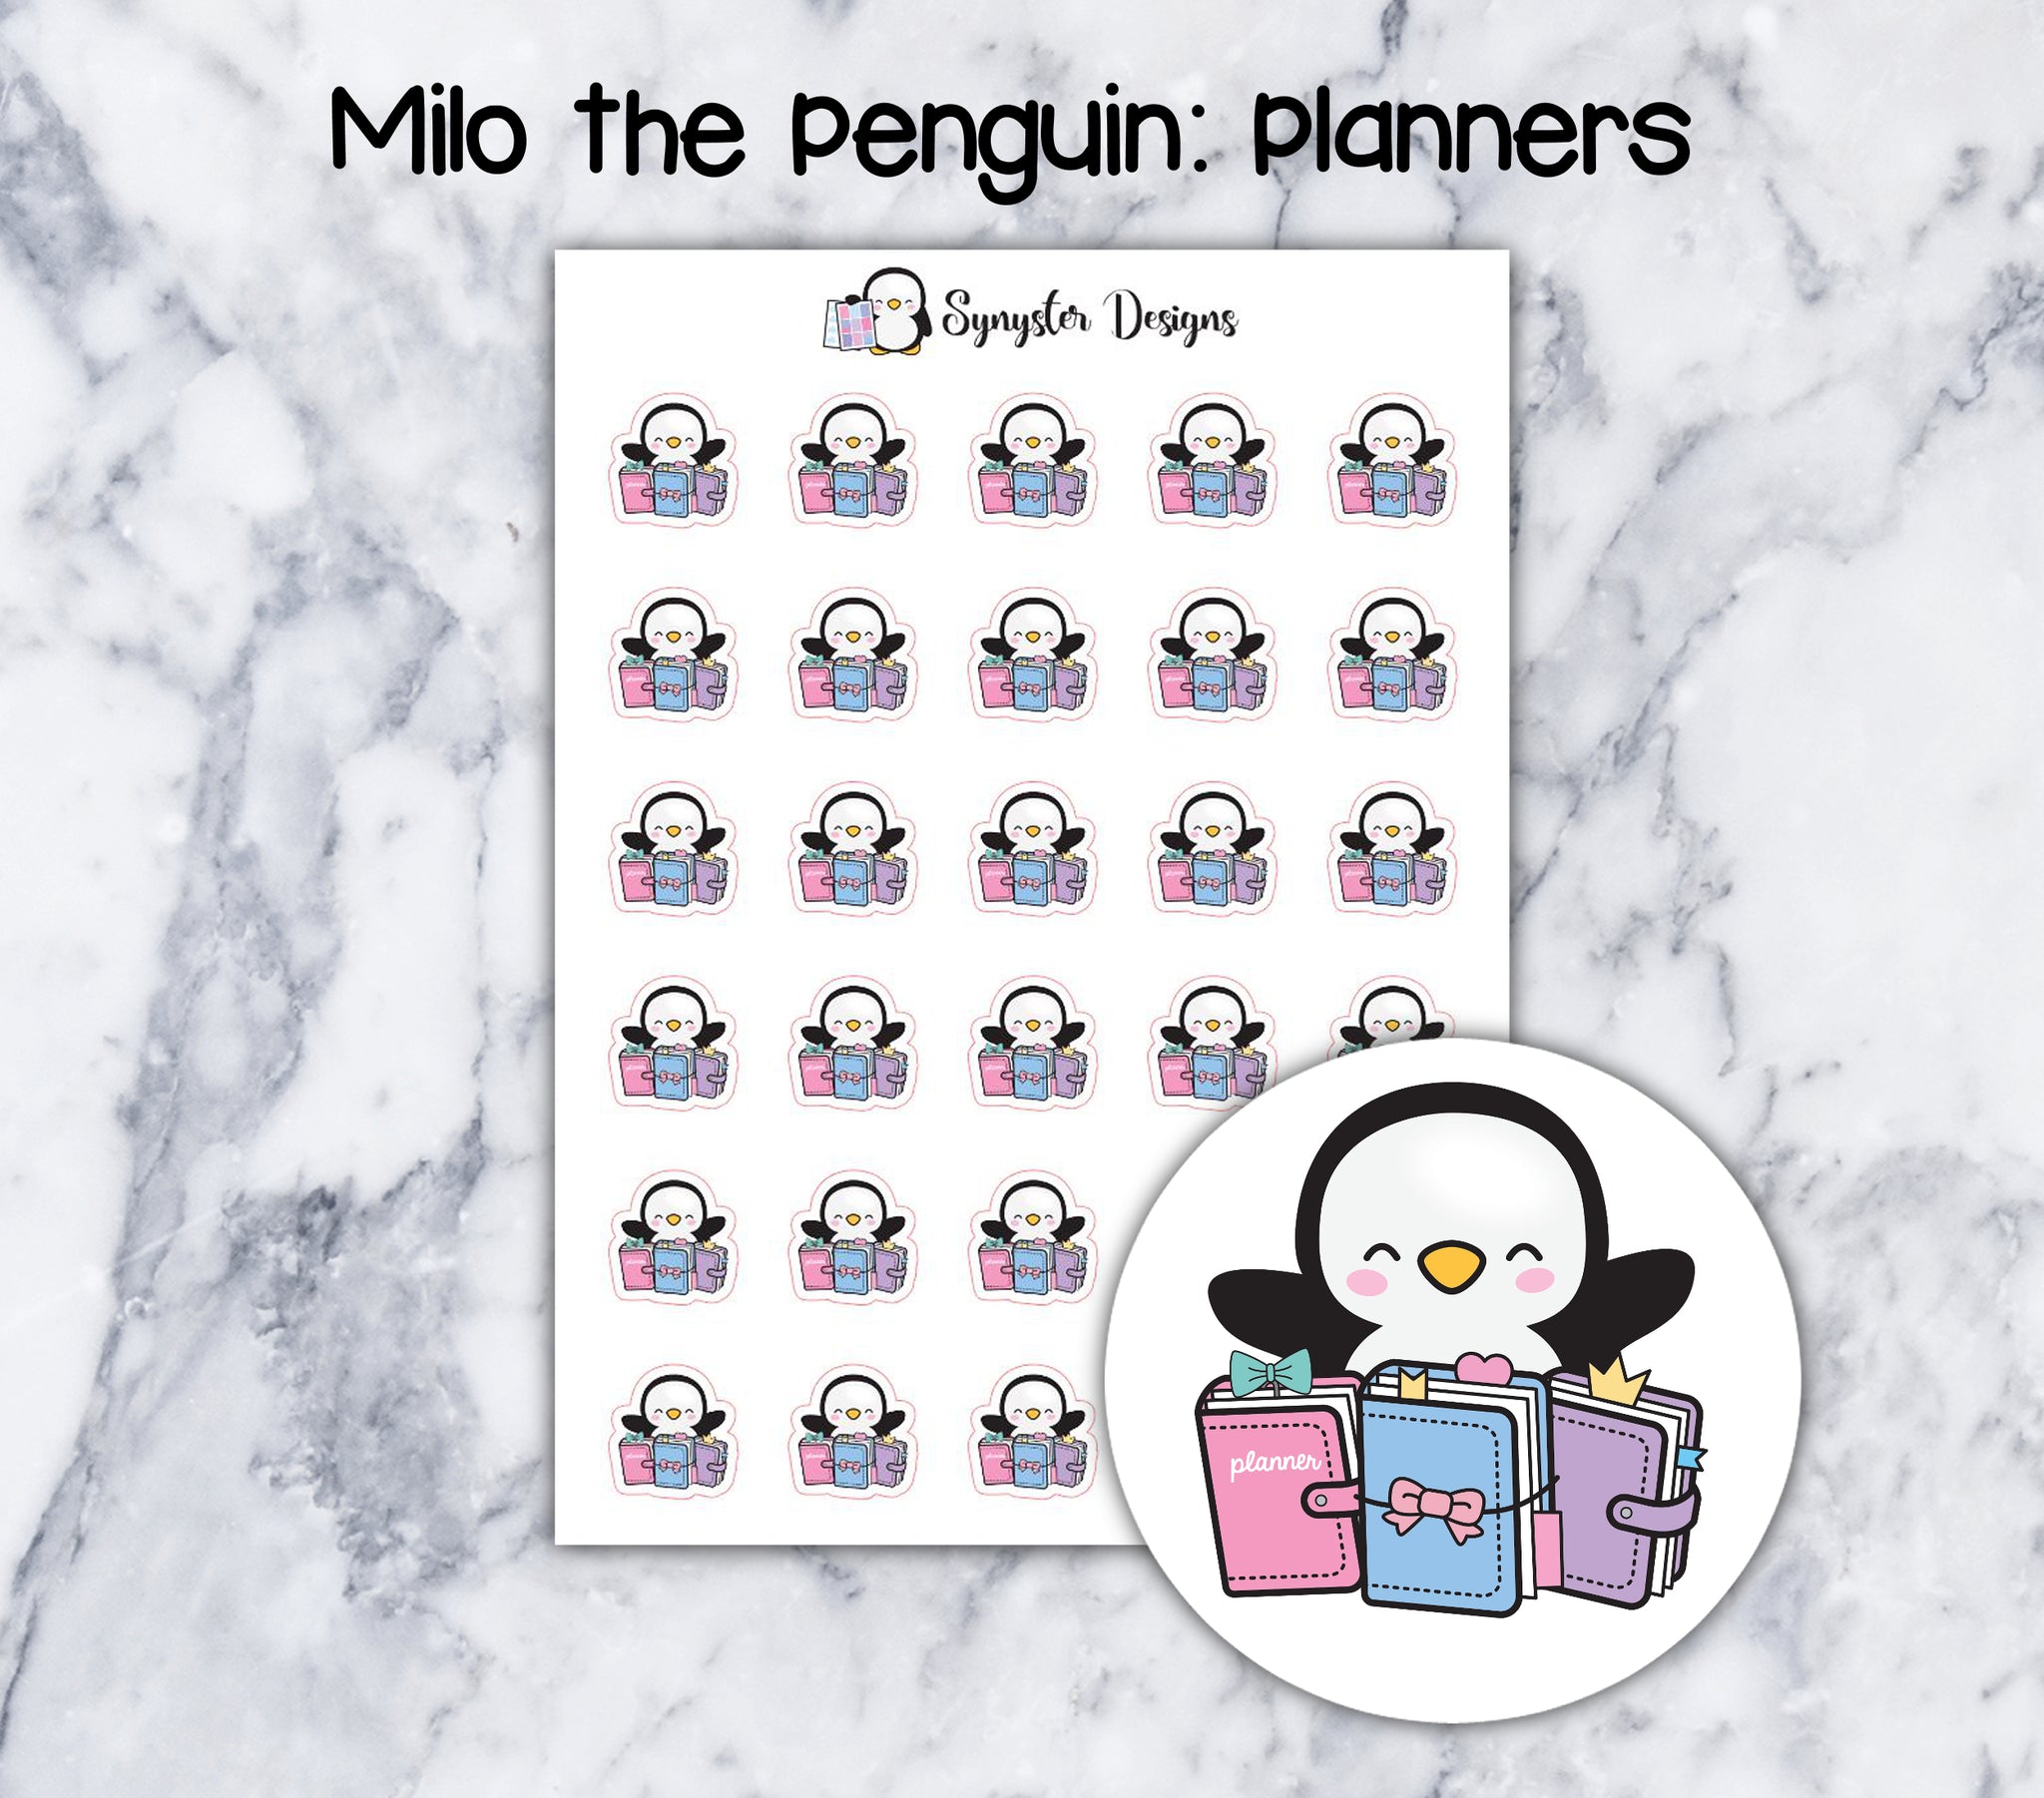 Planners Milo the Penguin